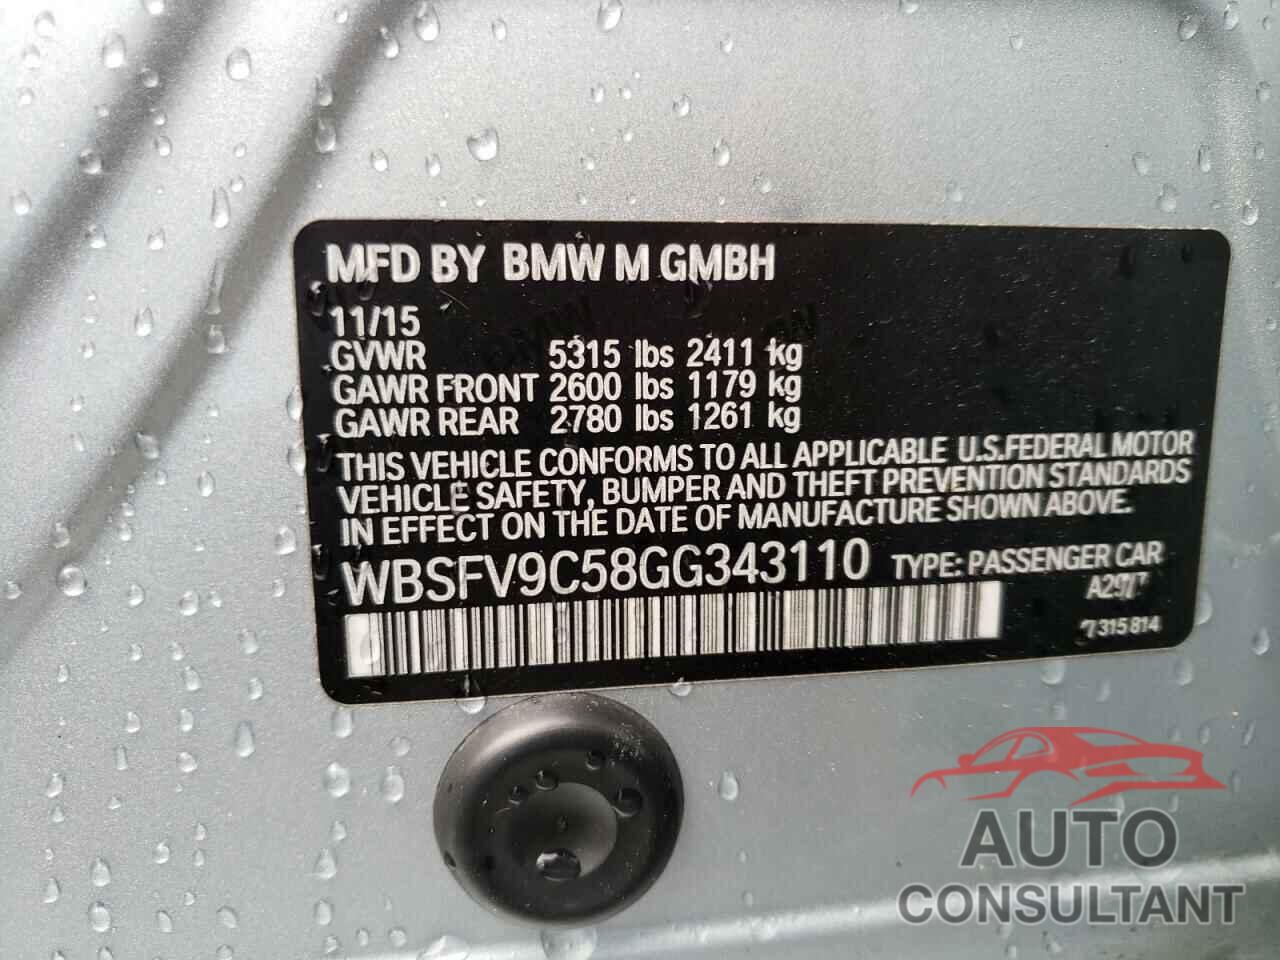 BMW M5 2016 - WBSFV9C58GG343110